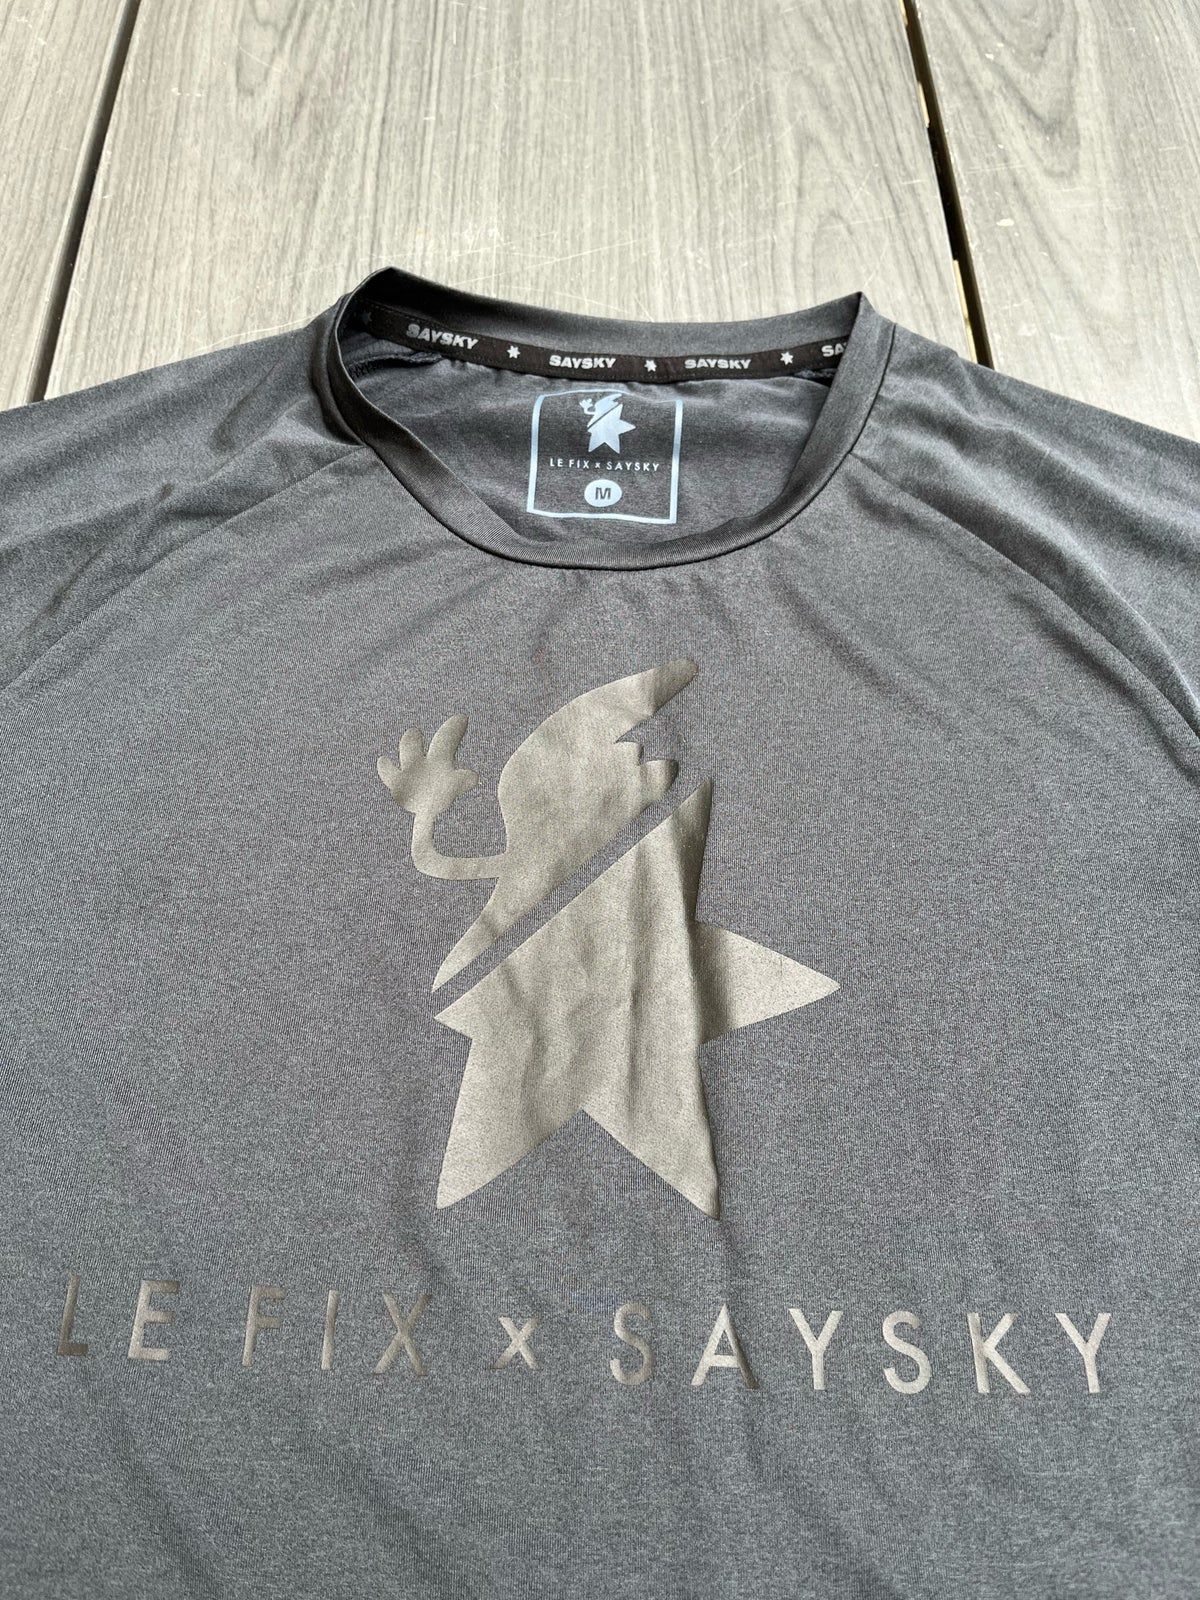 T-shirt, Le Fix x Saysky, str. M